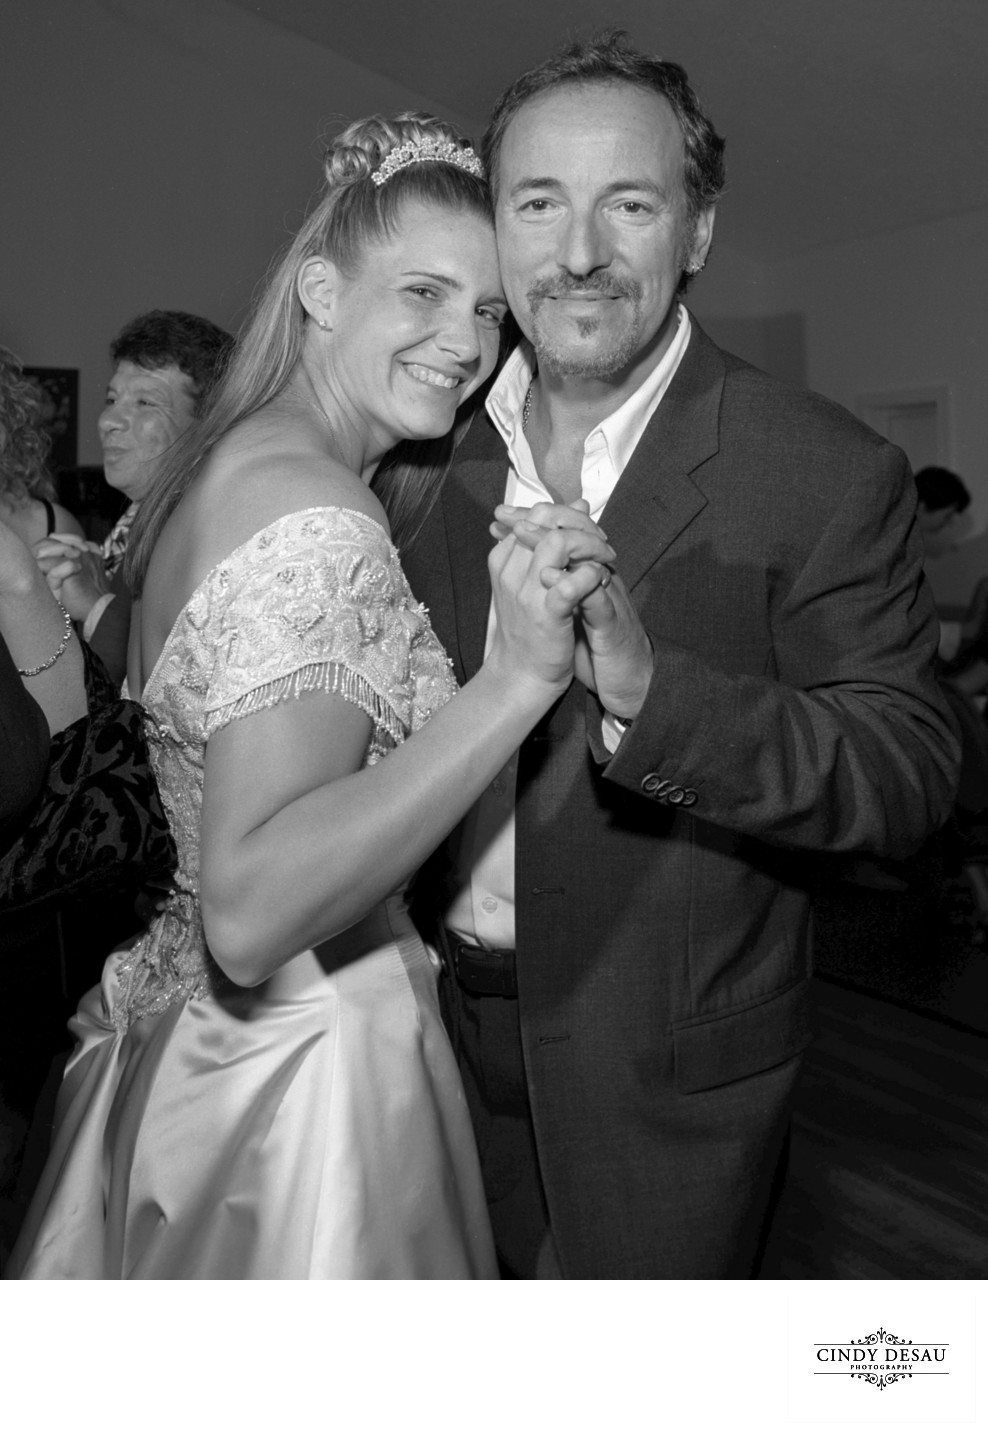 Bruce Springsteen Wedding Photographer in New Hope

